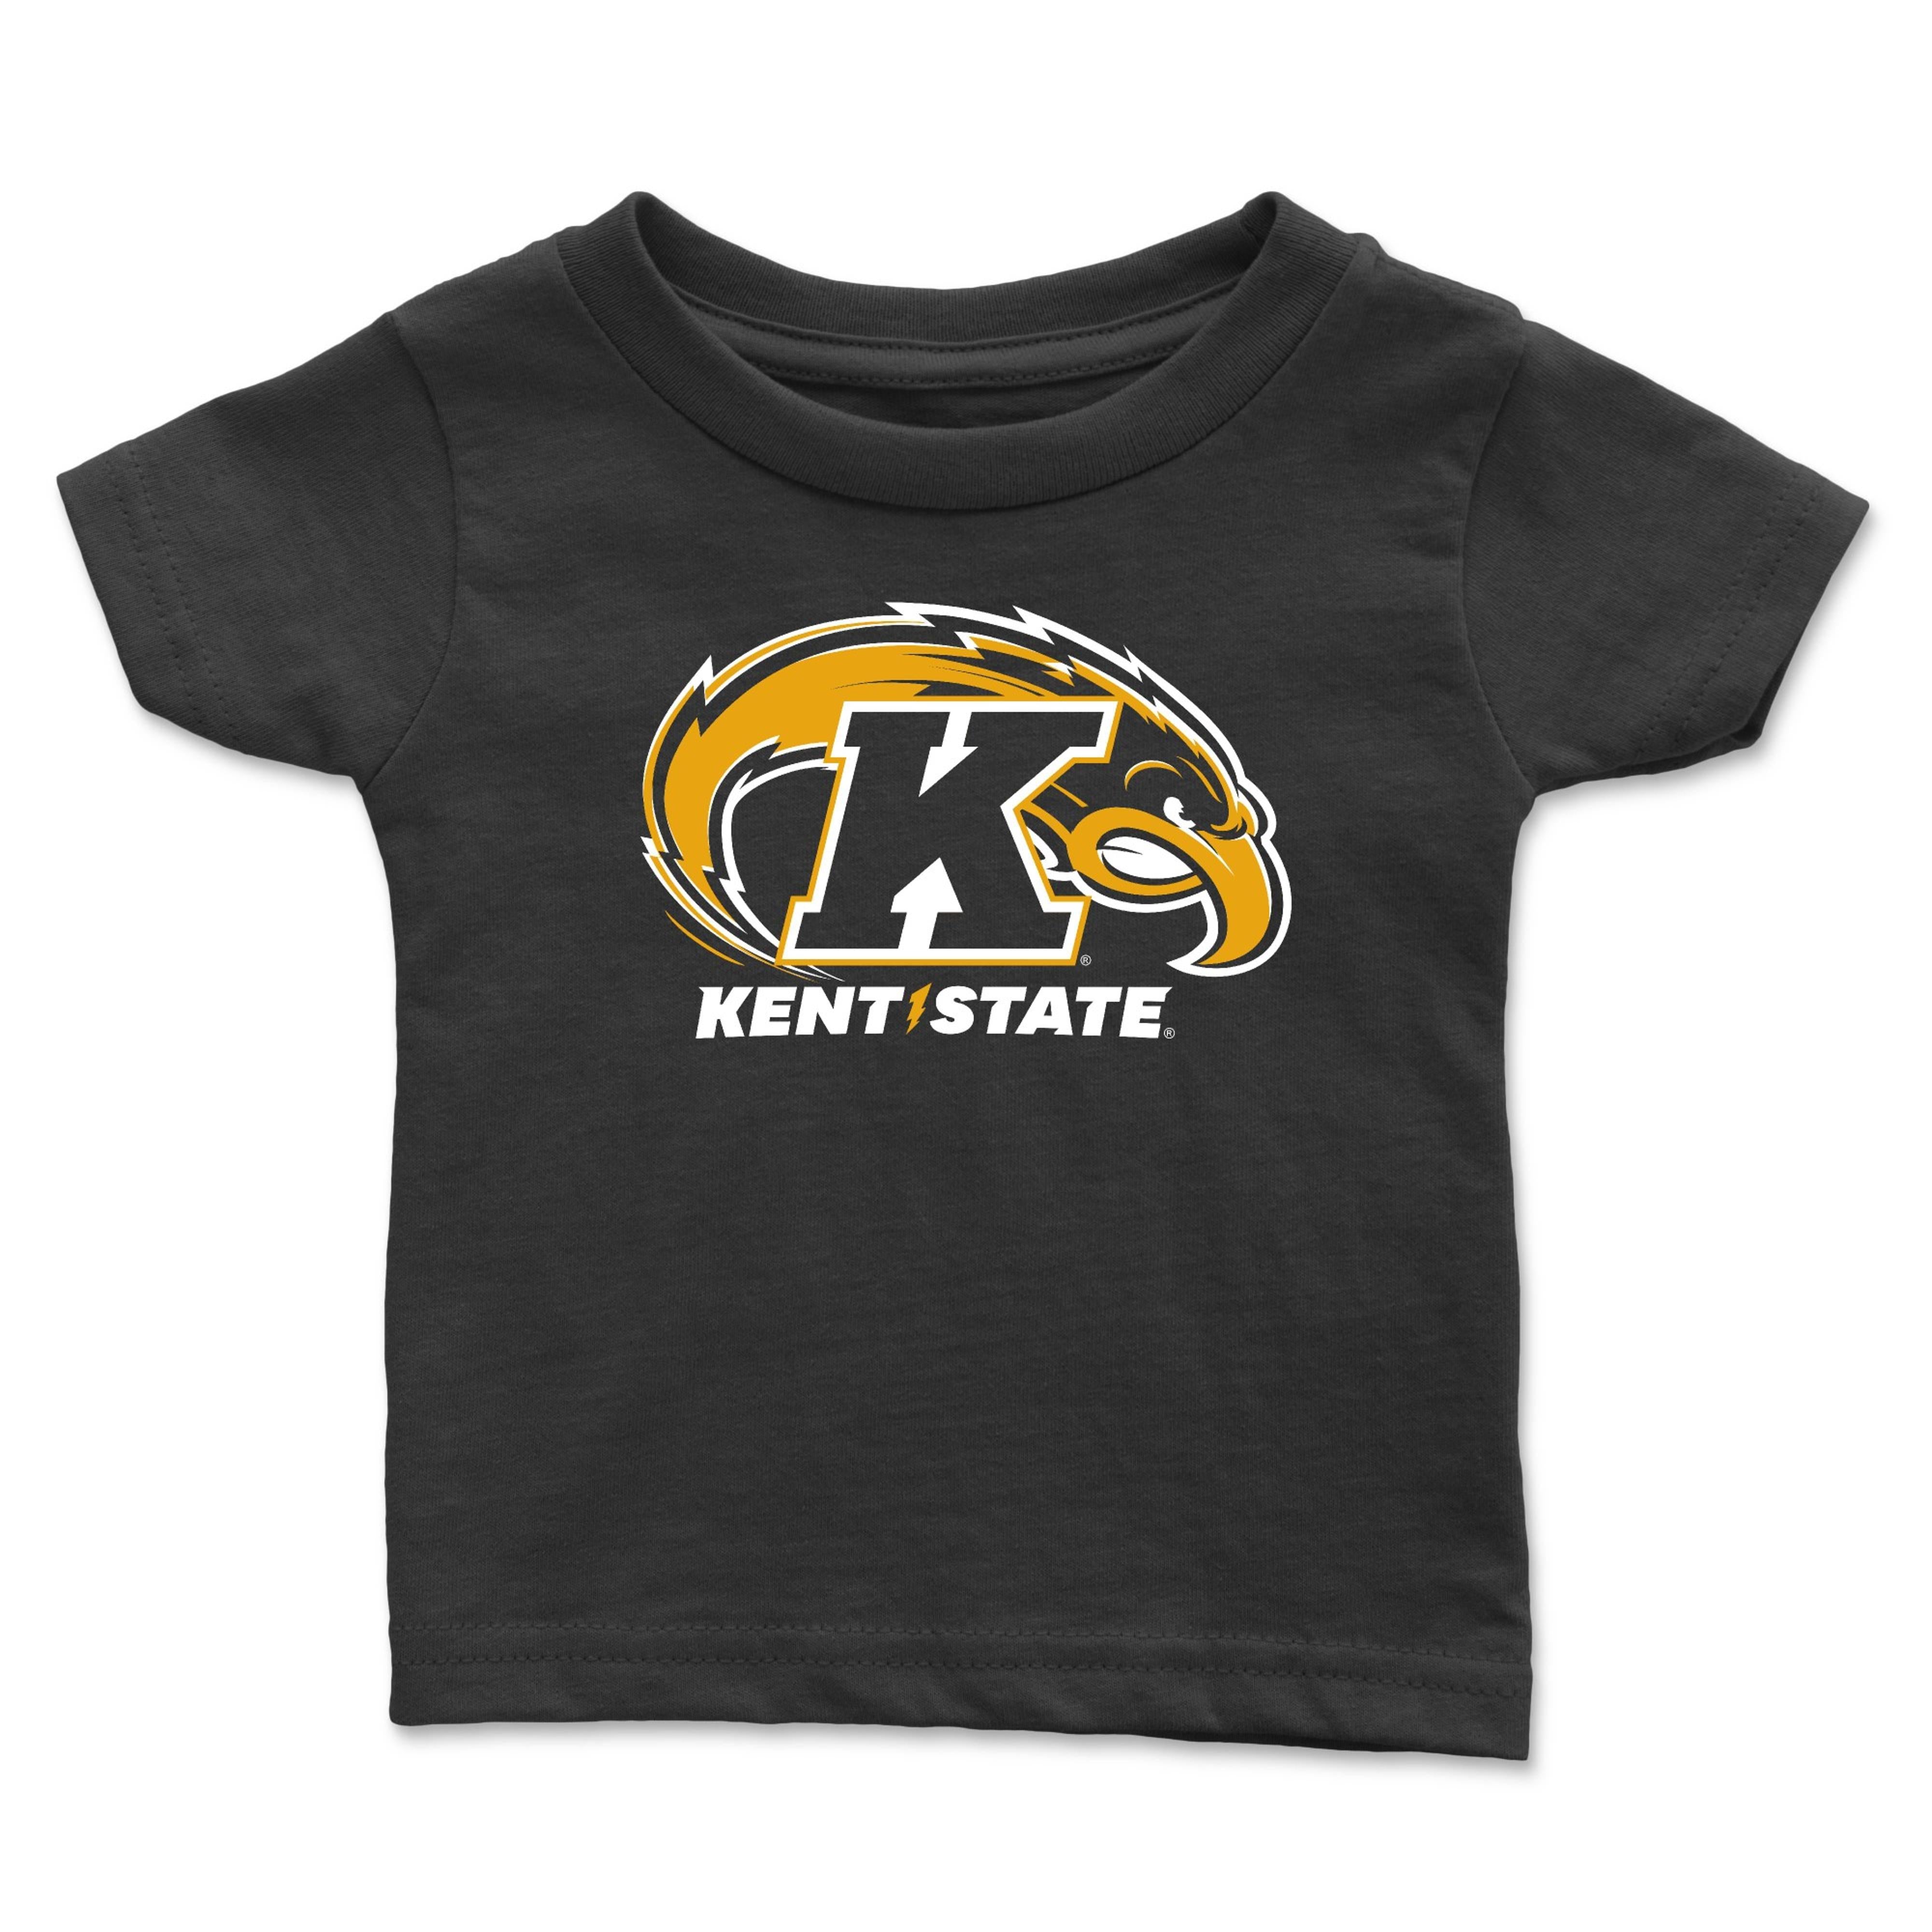 Kent State Navy Infant T-Shirt